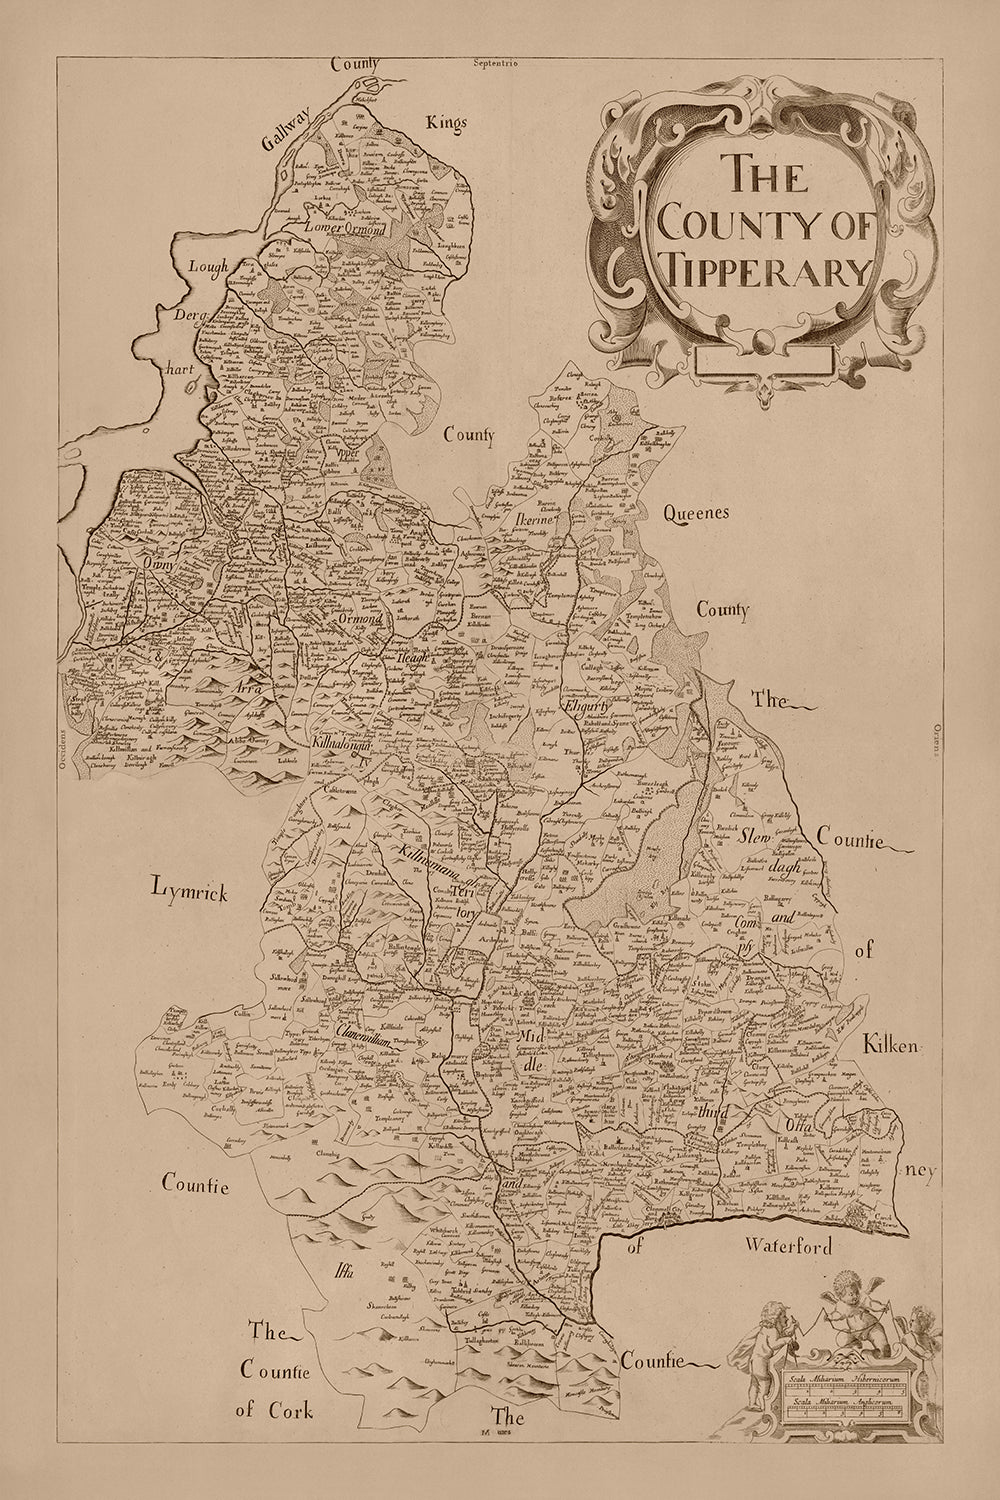 Old Map of County Tipperary by Petty, 1685: Cashel, Clonmel, Fethard, Nenagh, Roscrea